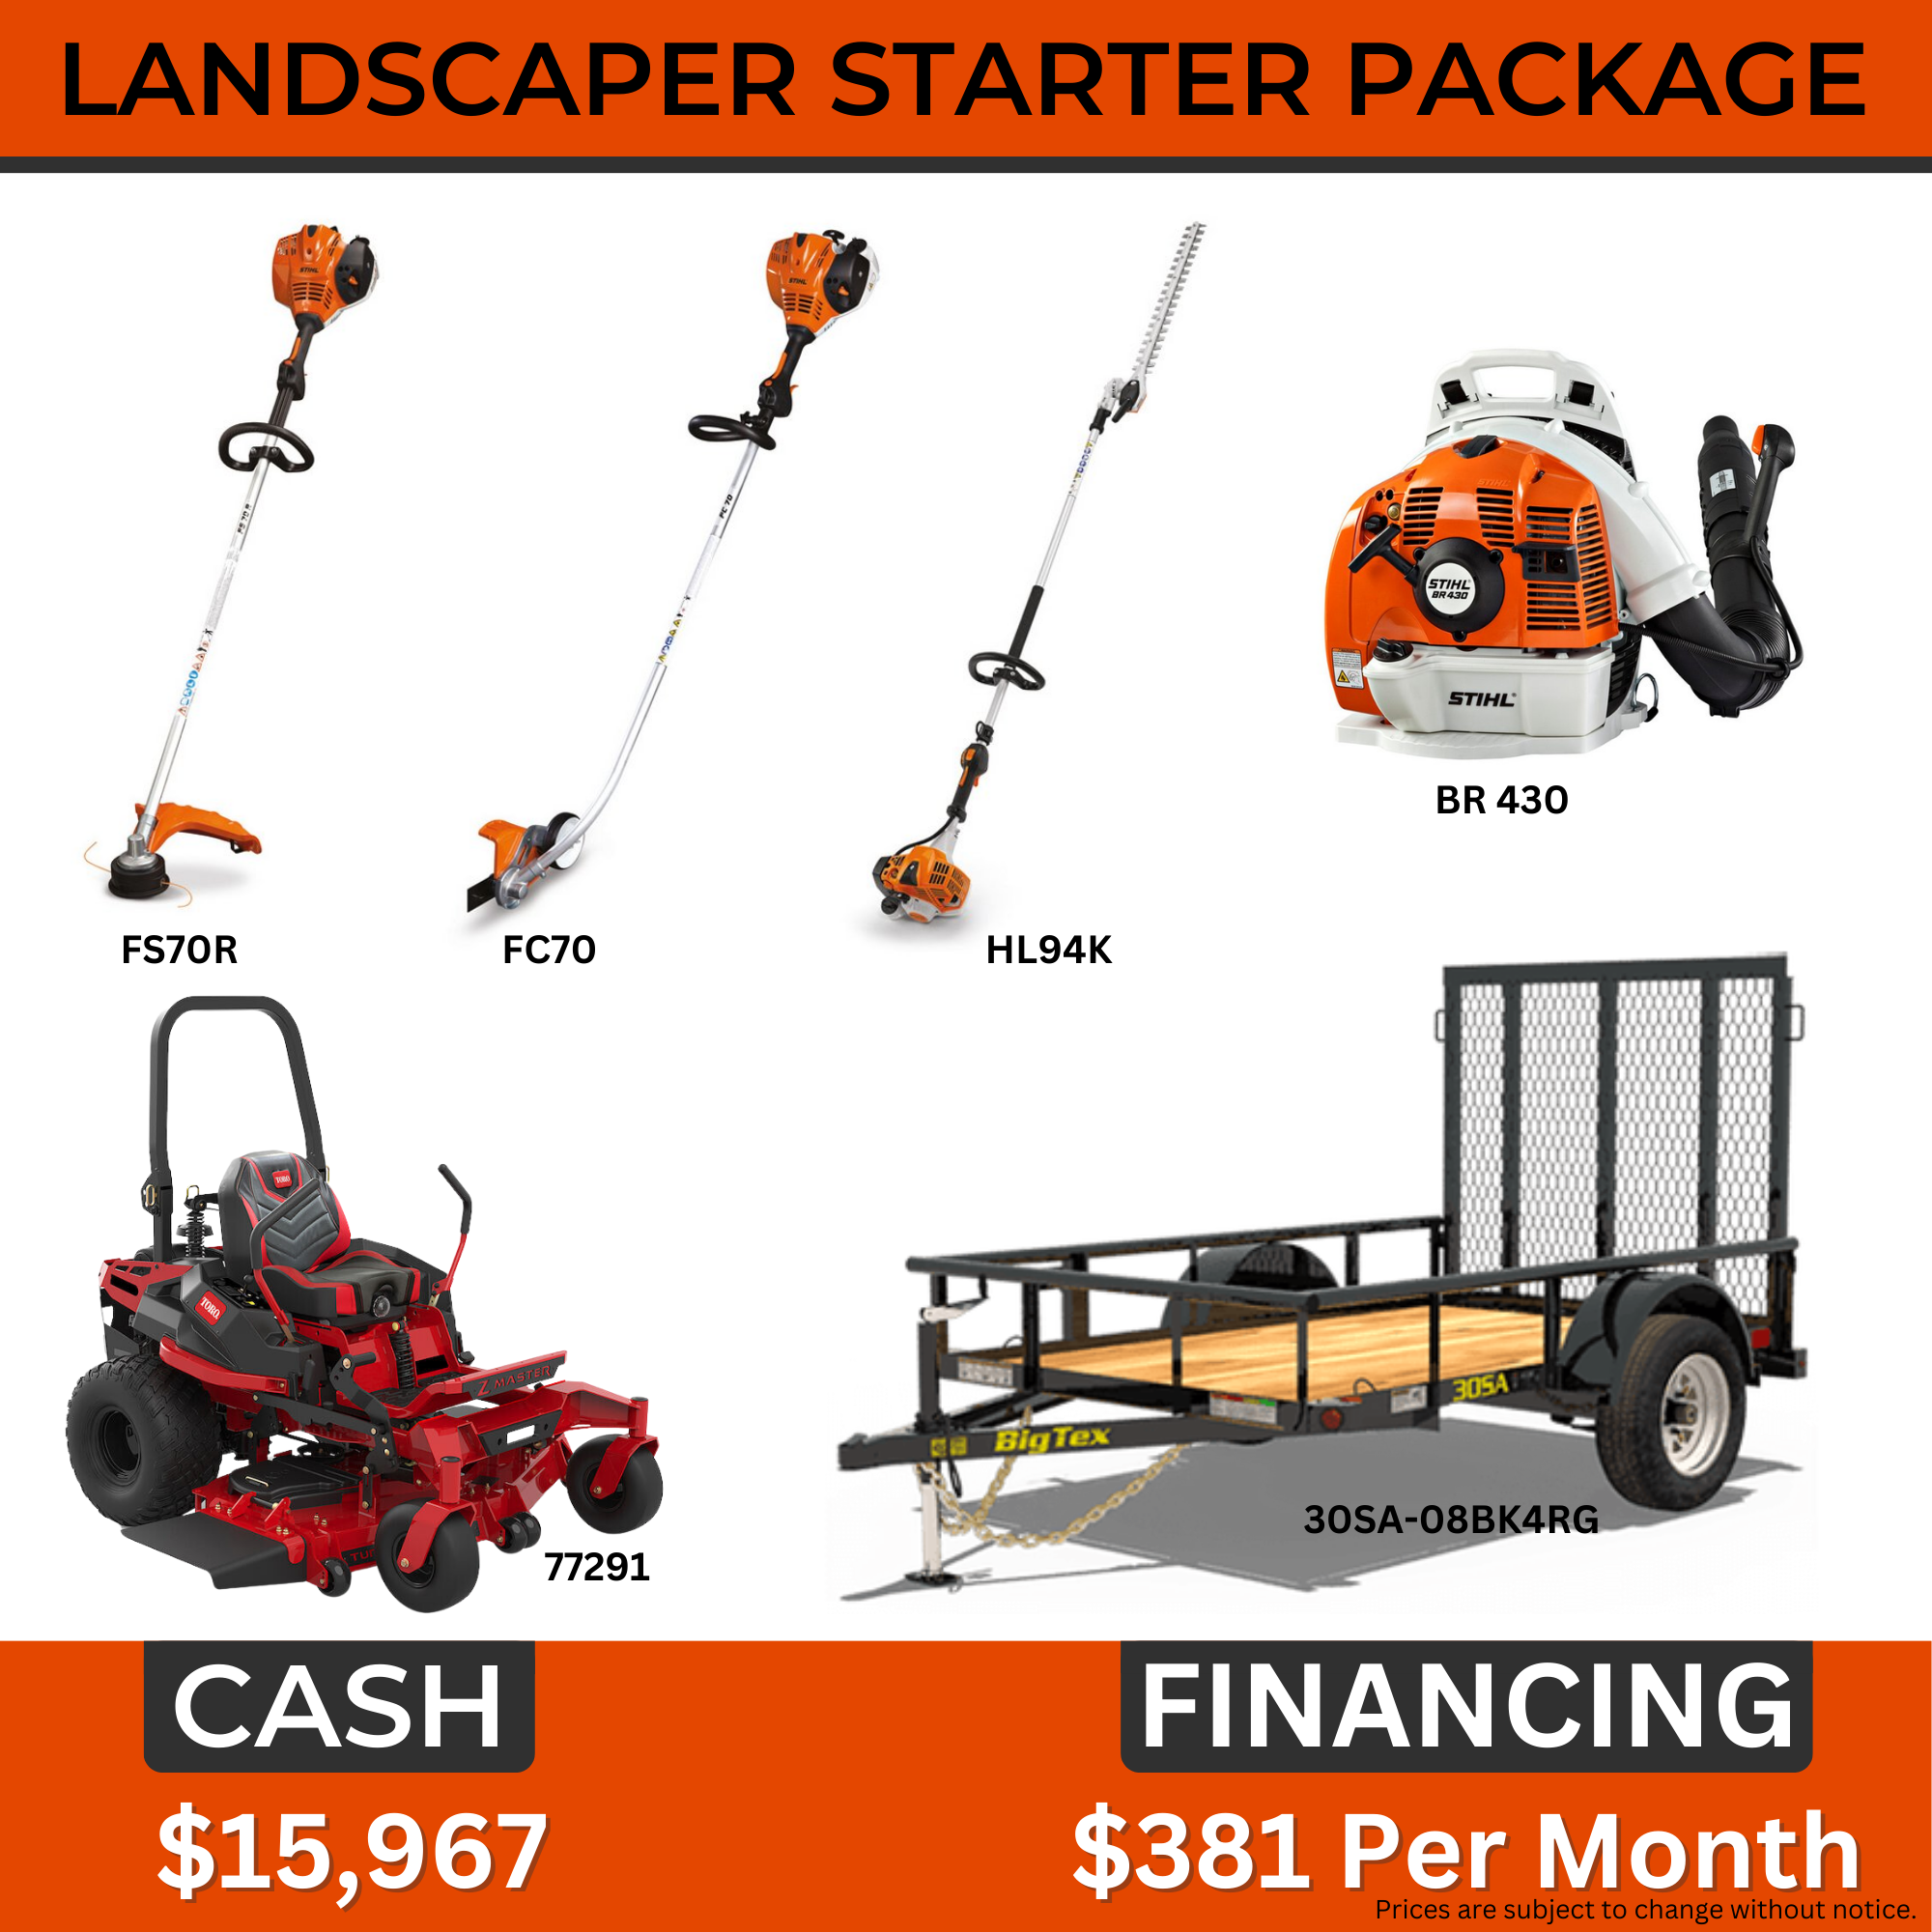 Landscape Starter Package |Mower|Trailer|Trimmer|Edger|Hedge Trimmer|Blower